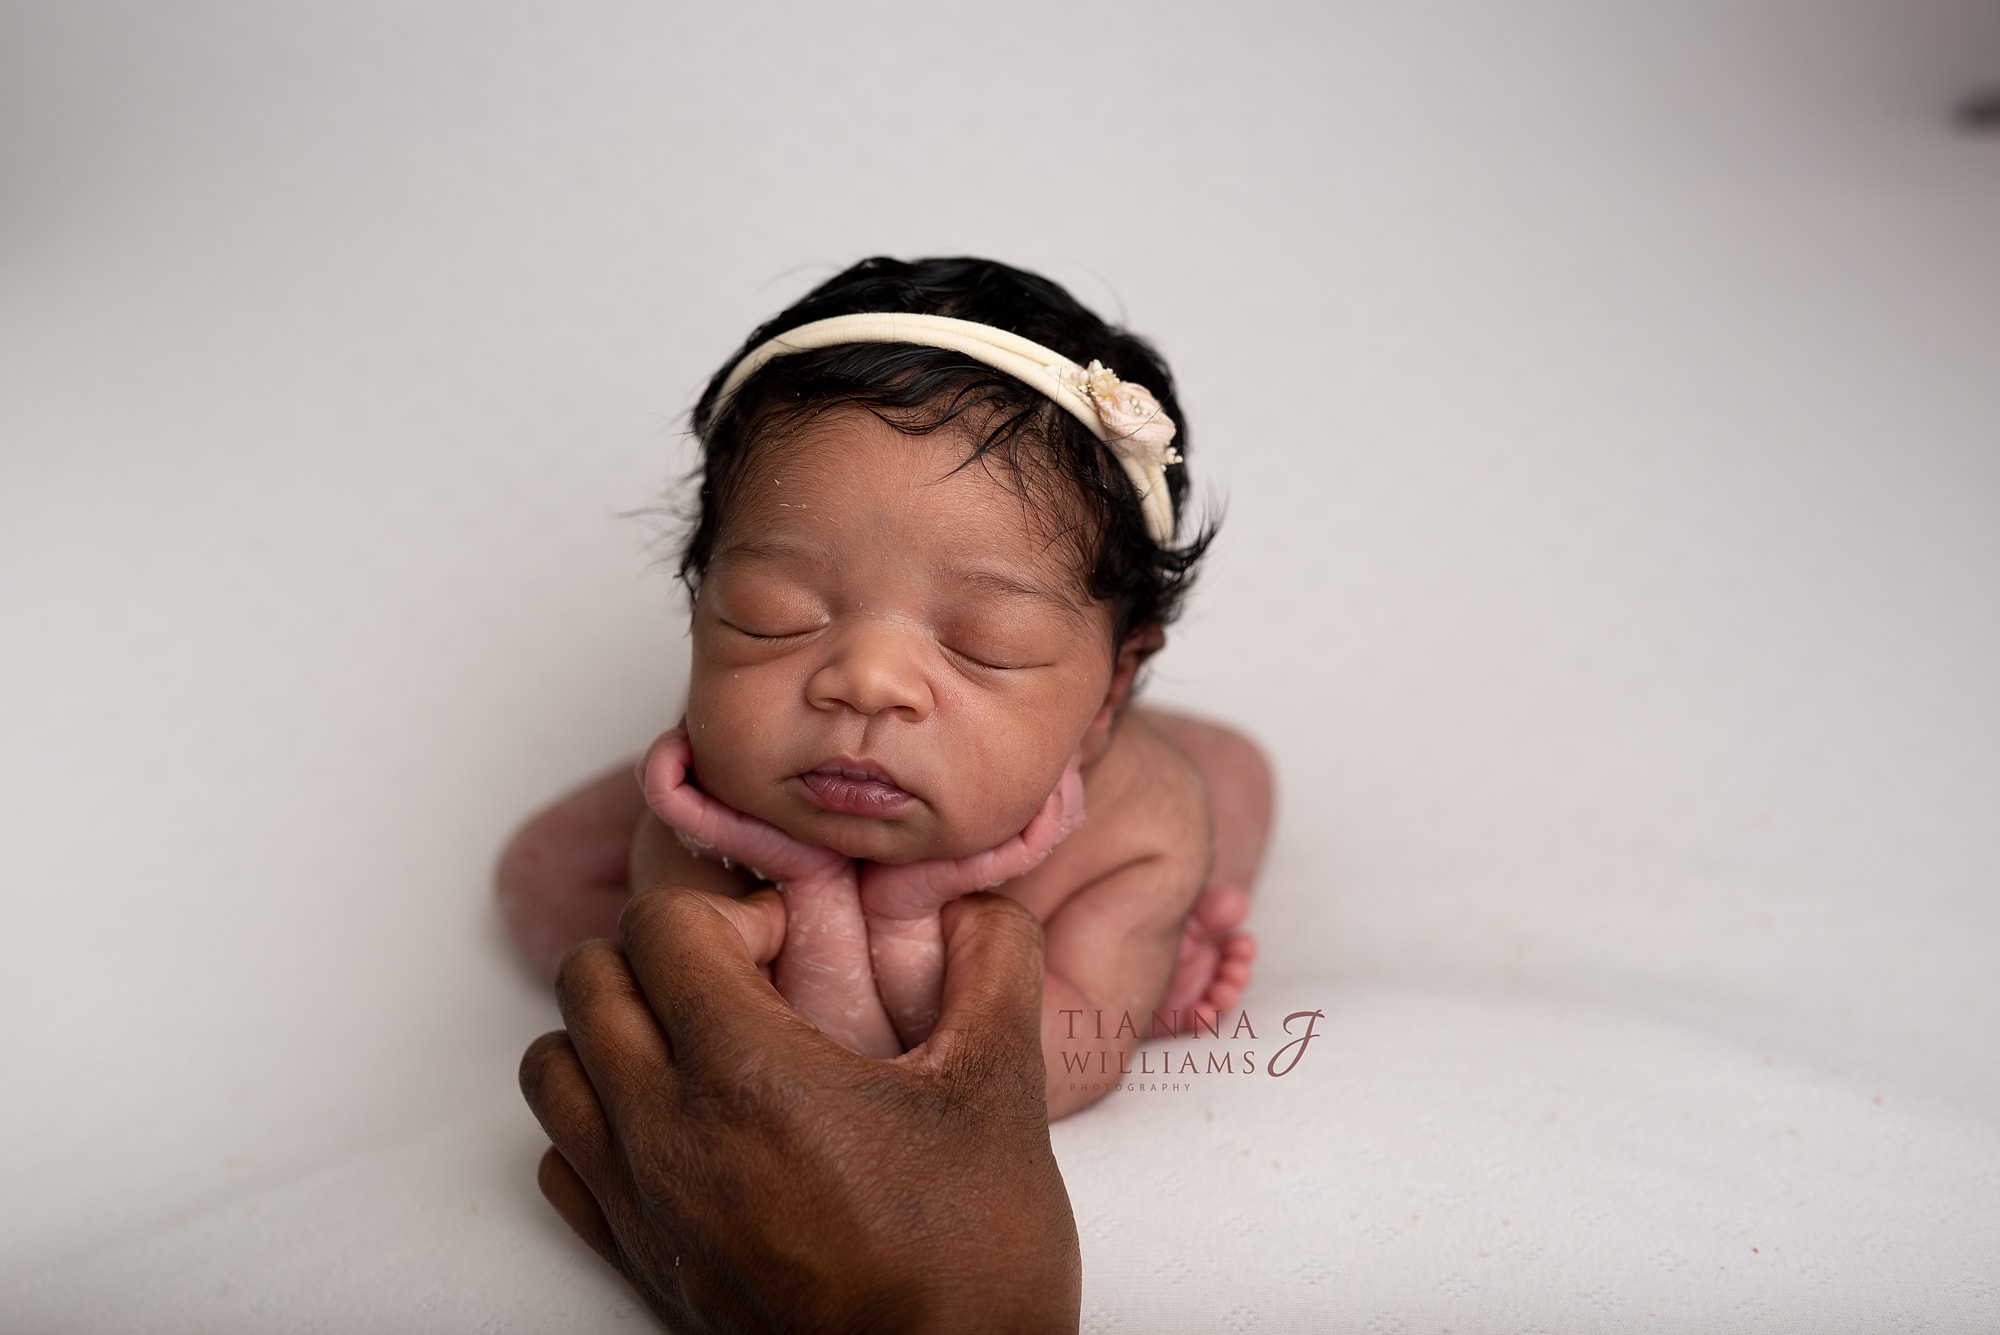 newborn photoshoot ideas – Tiana Creation Newborn photography